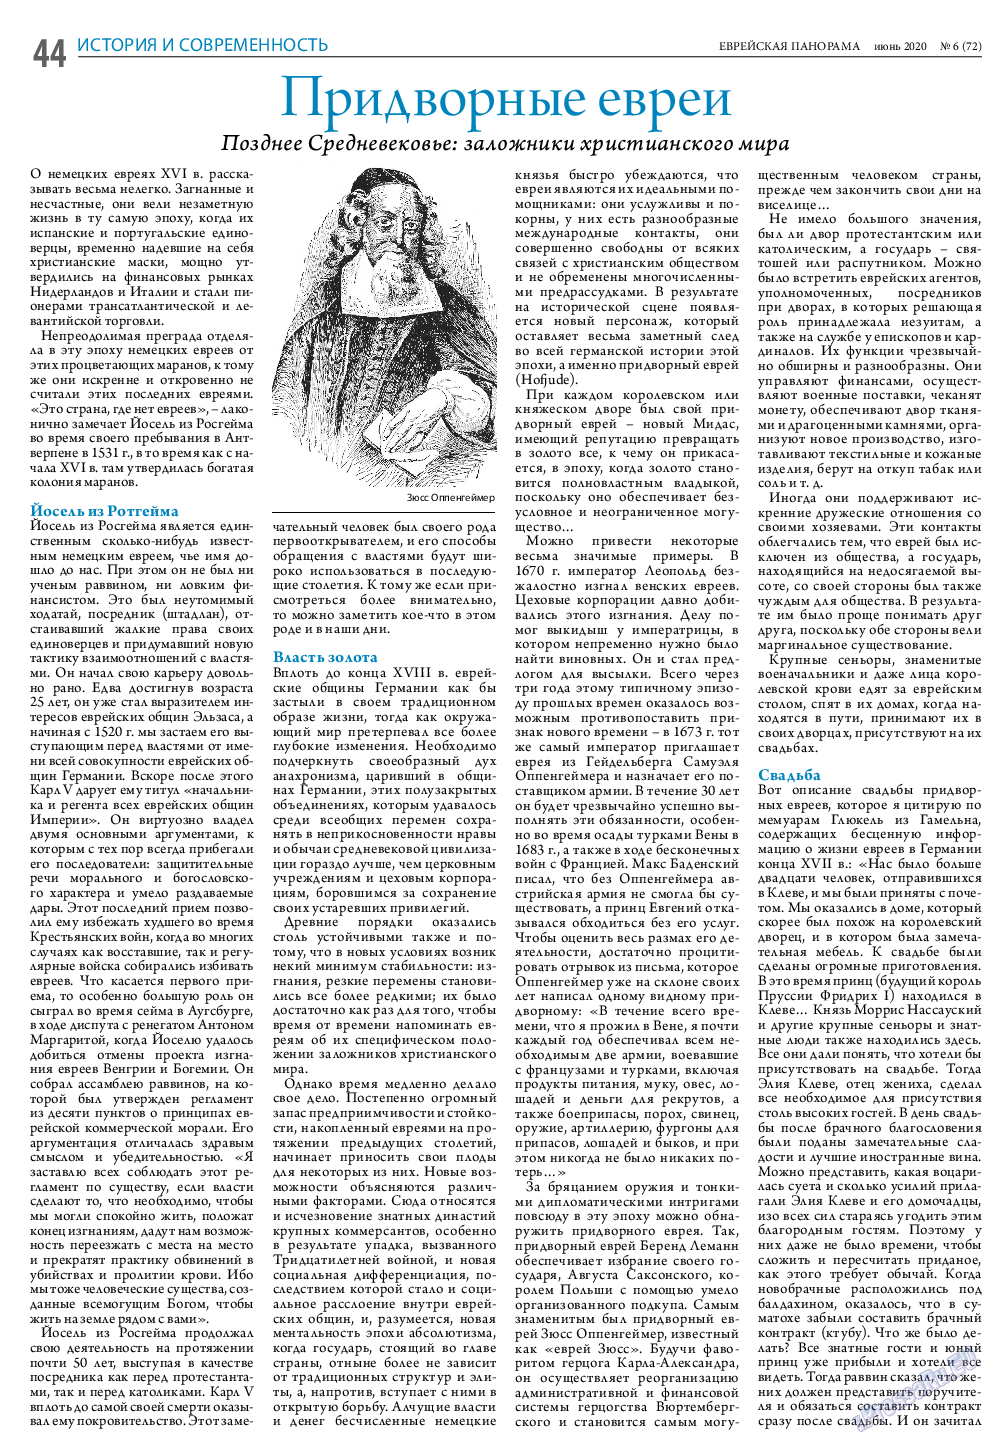 Еврейская панорама, газета. 2020 №6 стр.44